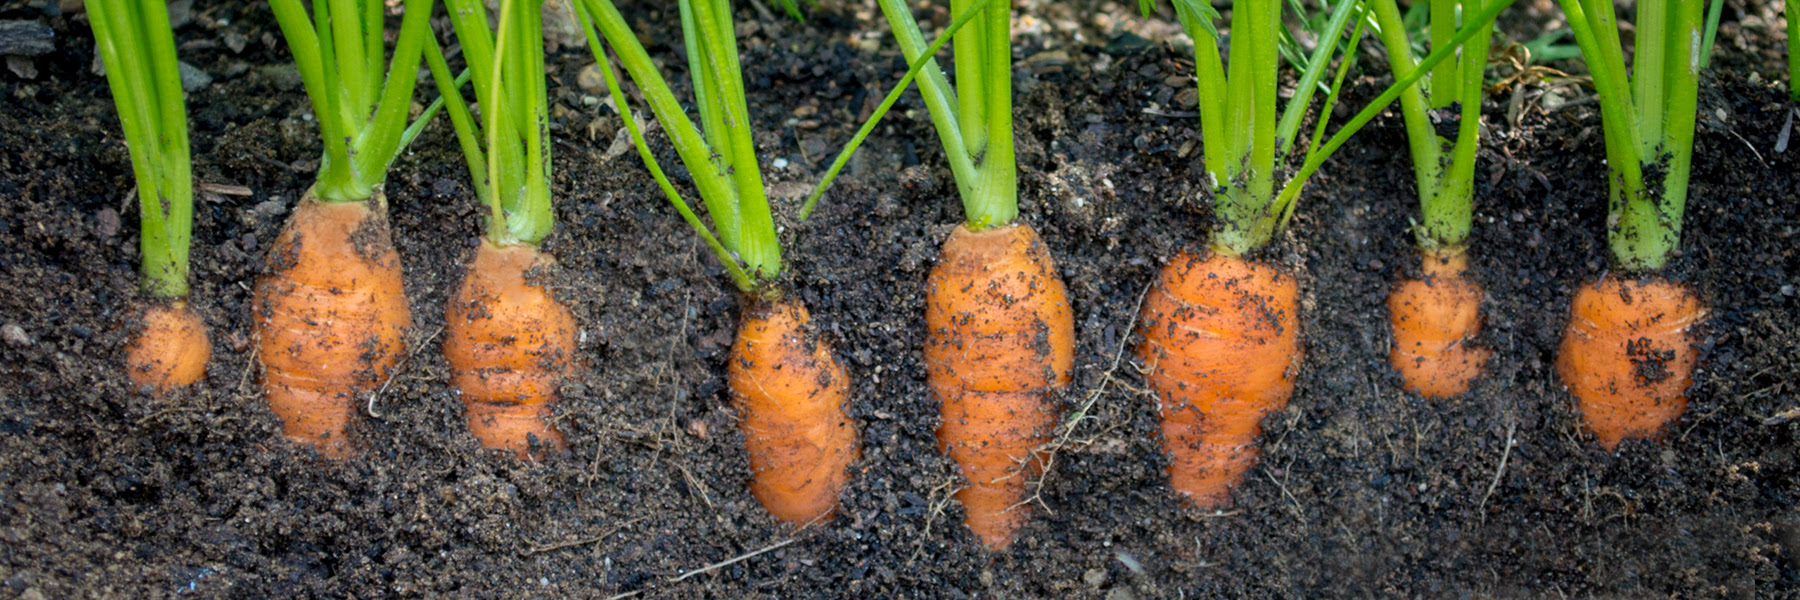 Carrots in Dirt